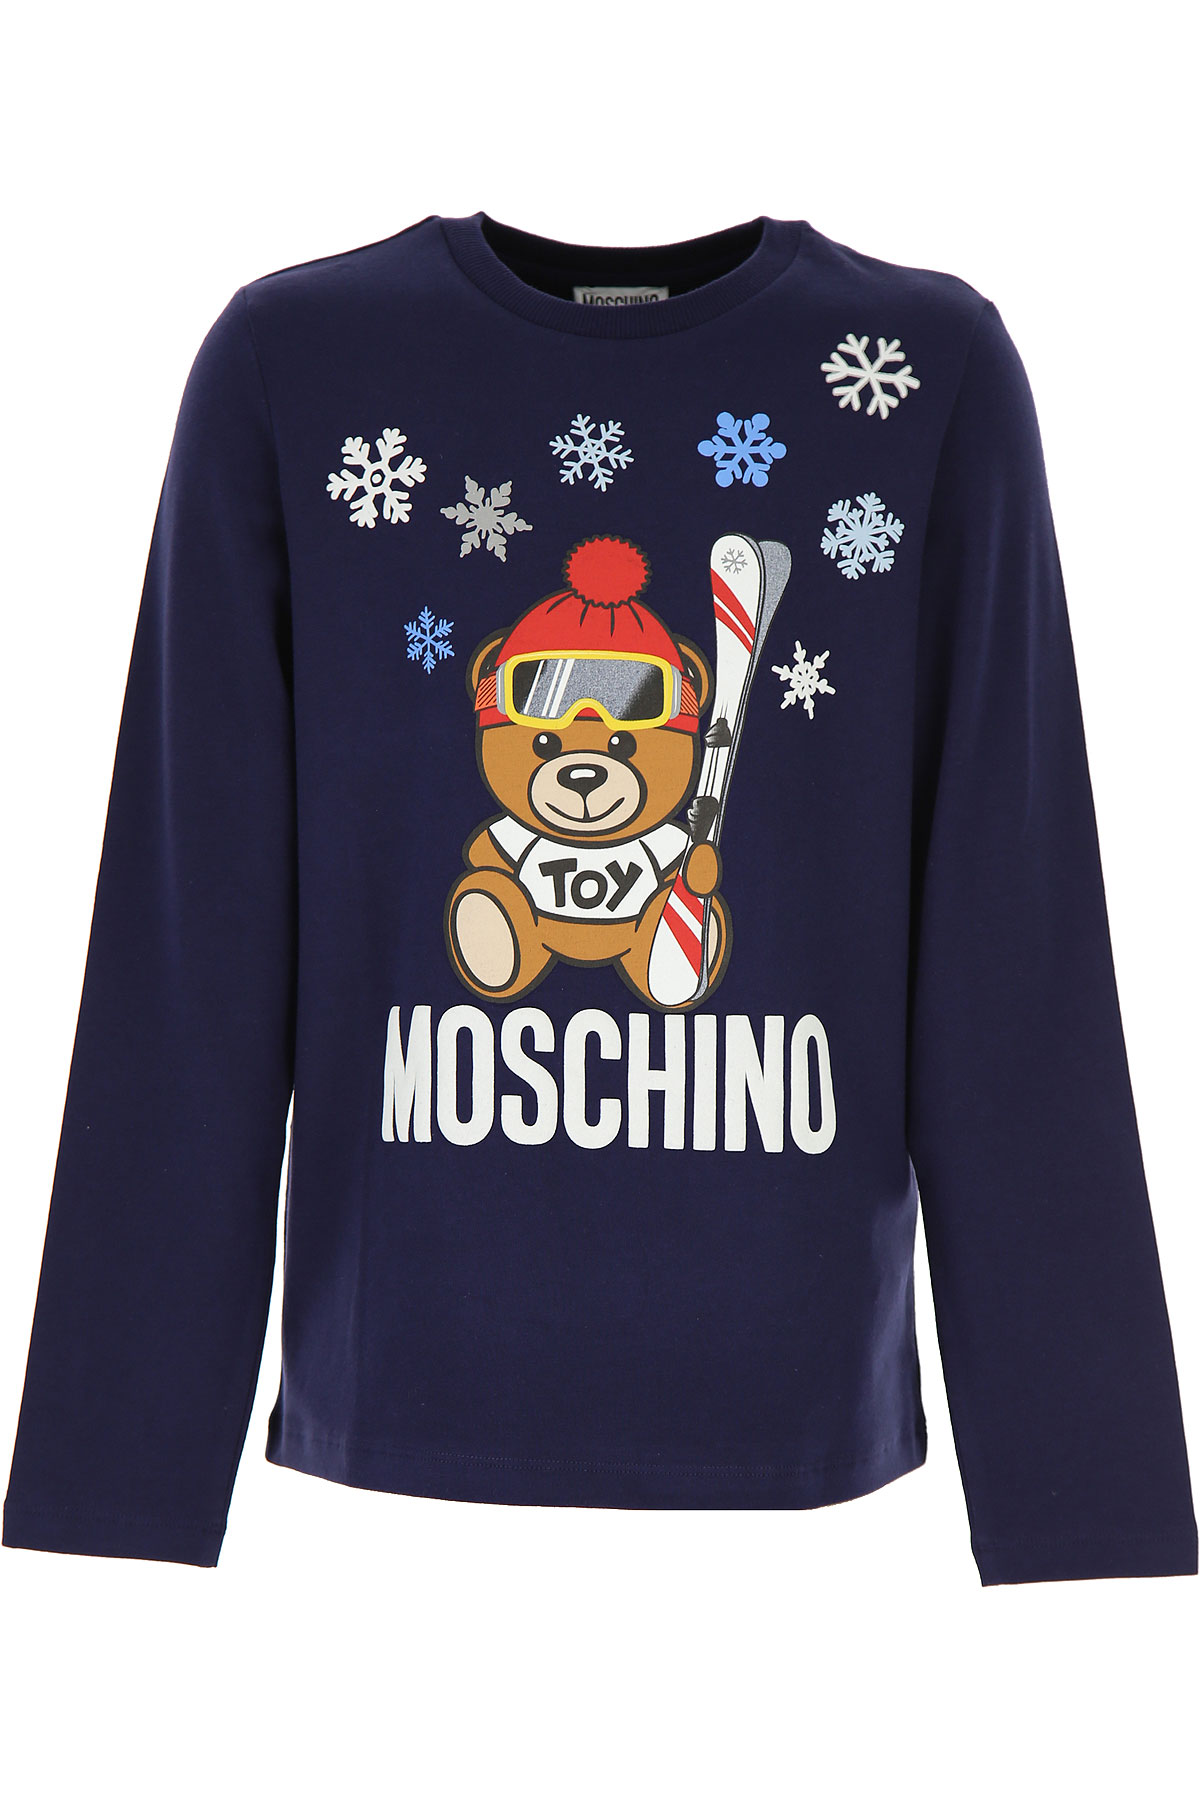 Moschino Kinder T-Shirt für Jungen Günstig im Sale, Blau, Baumwolle, 2017, 10Y 12Y 4Y 5Y 8Y